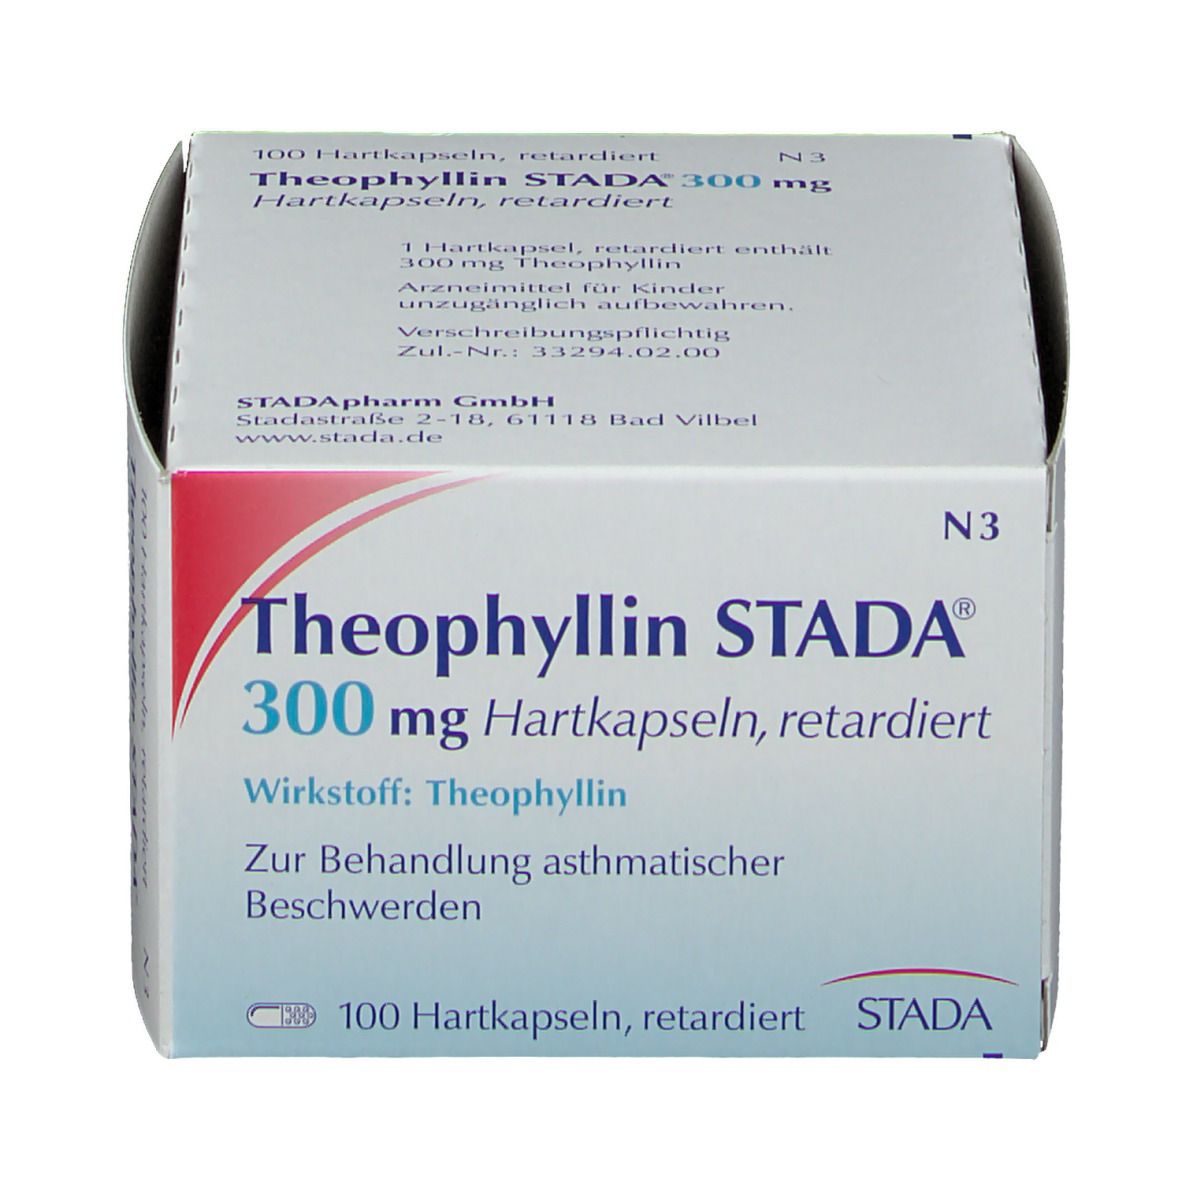 Theophyllin STADA® 300 mg retard